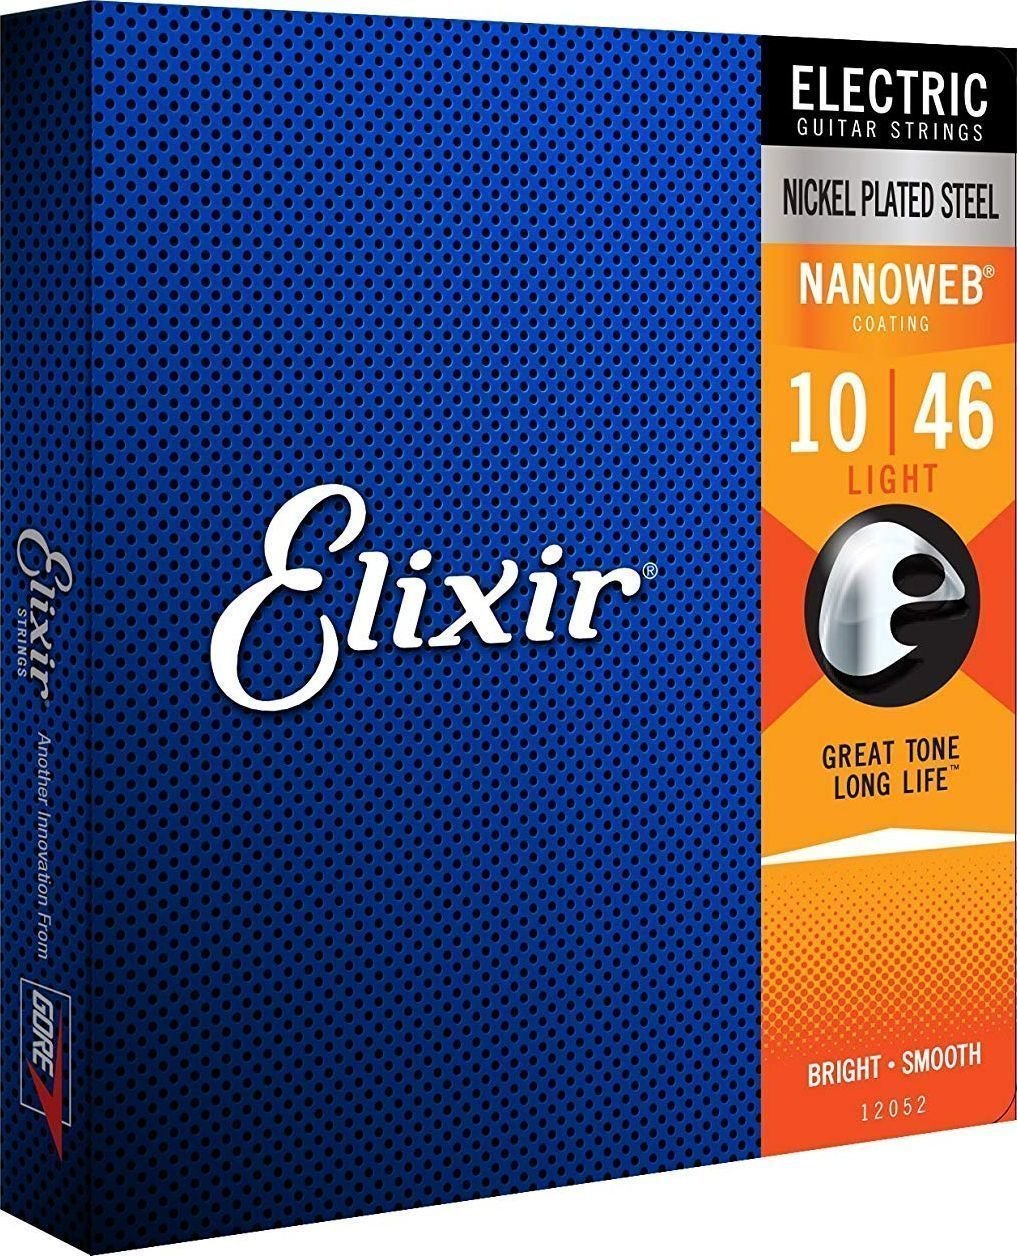 Corzi chitare electrice Elixir 12052 Nanoweb 10-46